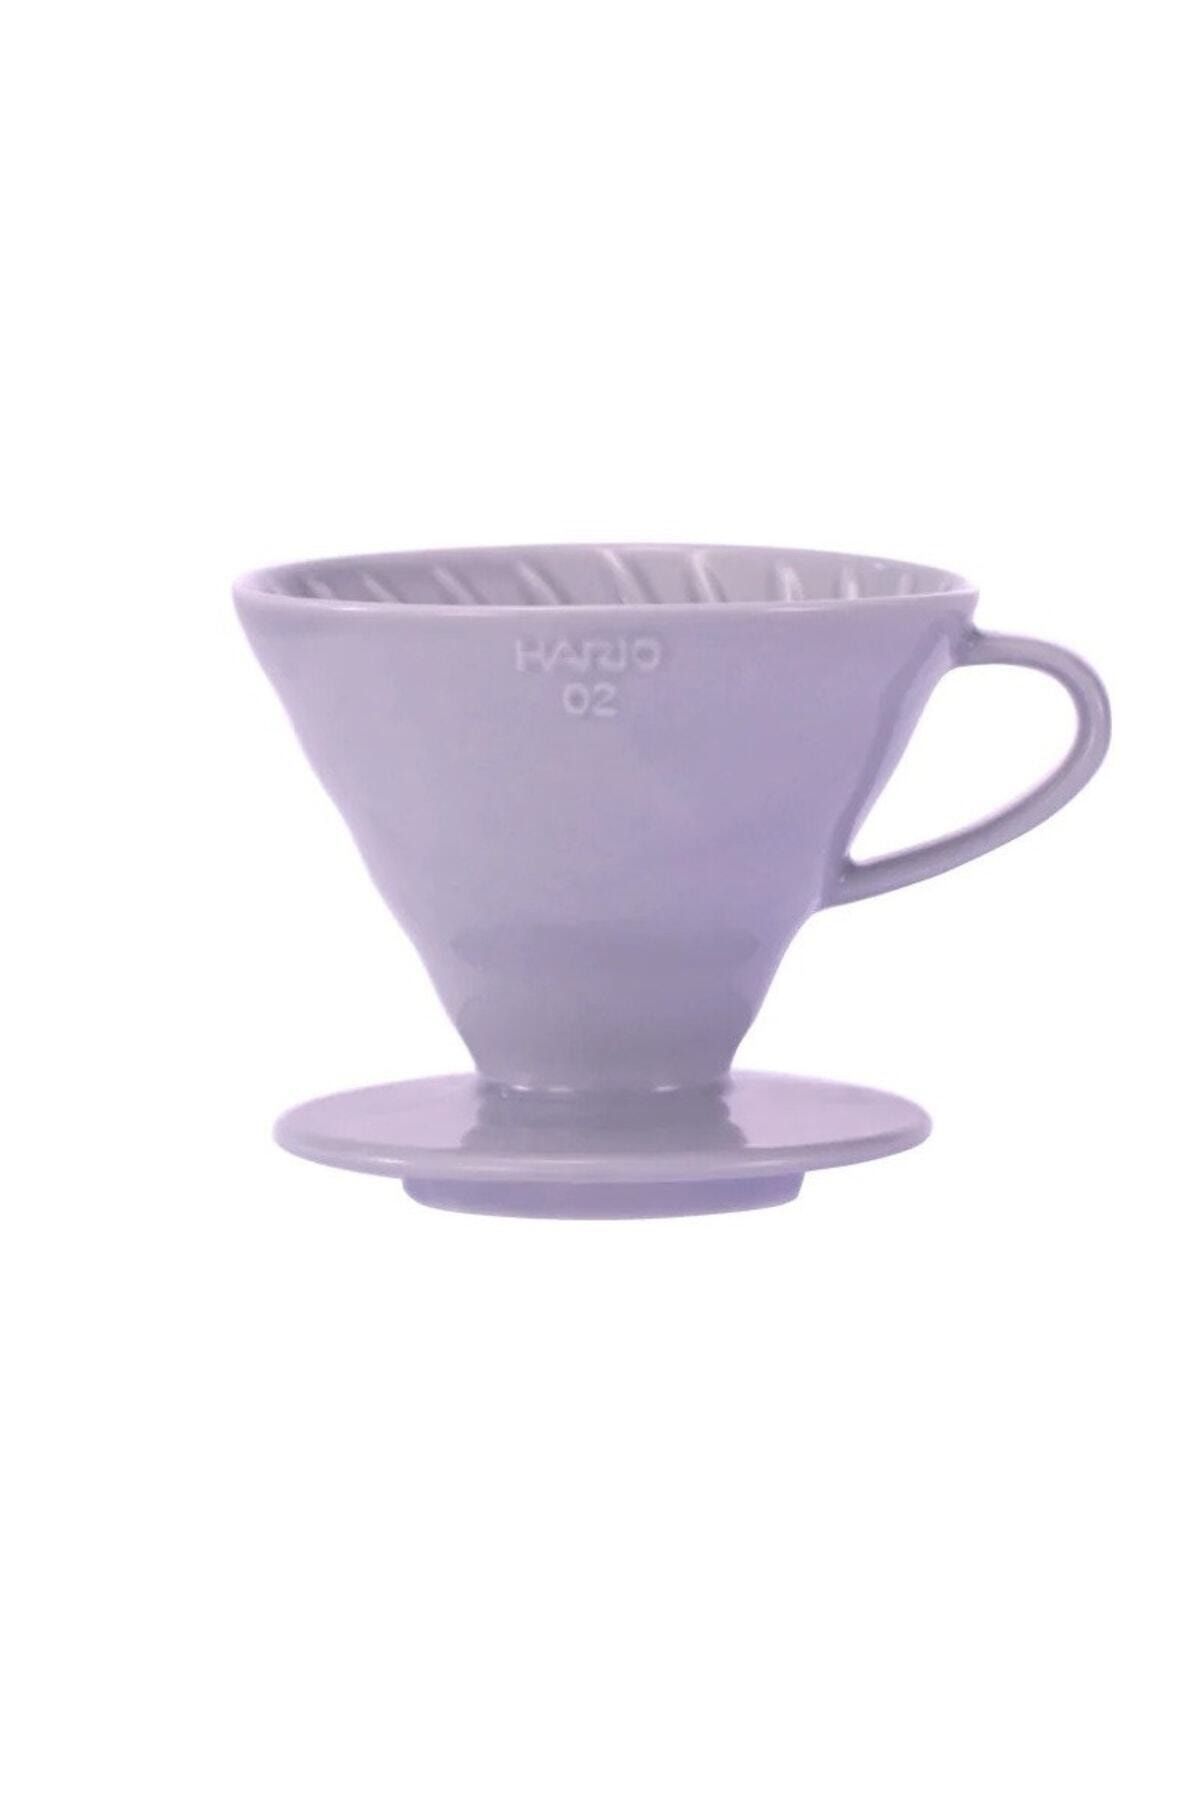 Hario V60 02 Ceramic Dripper (purple Heater)